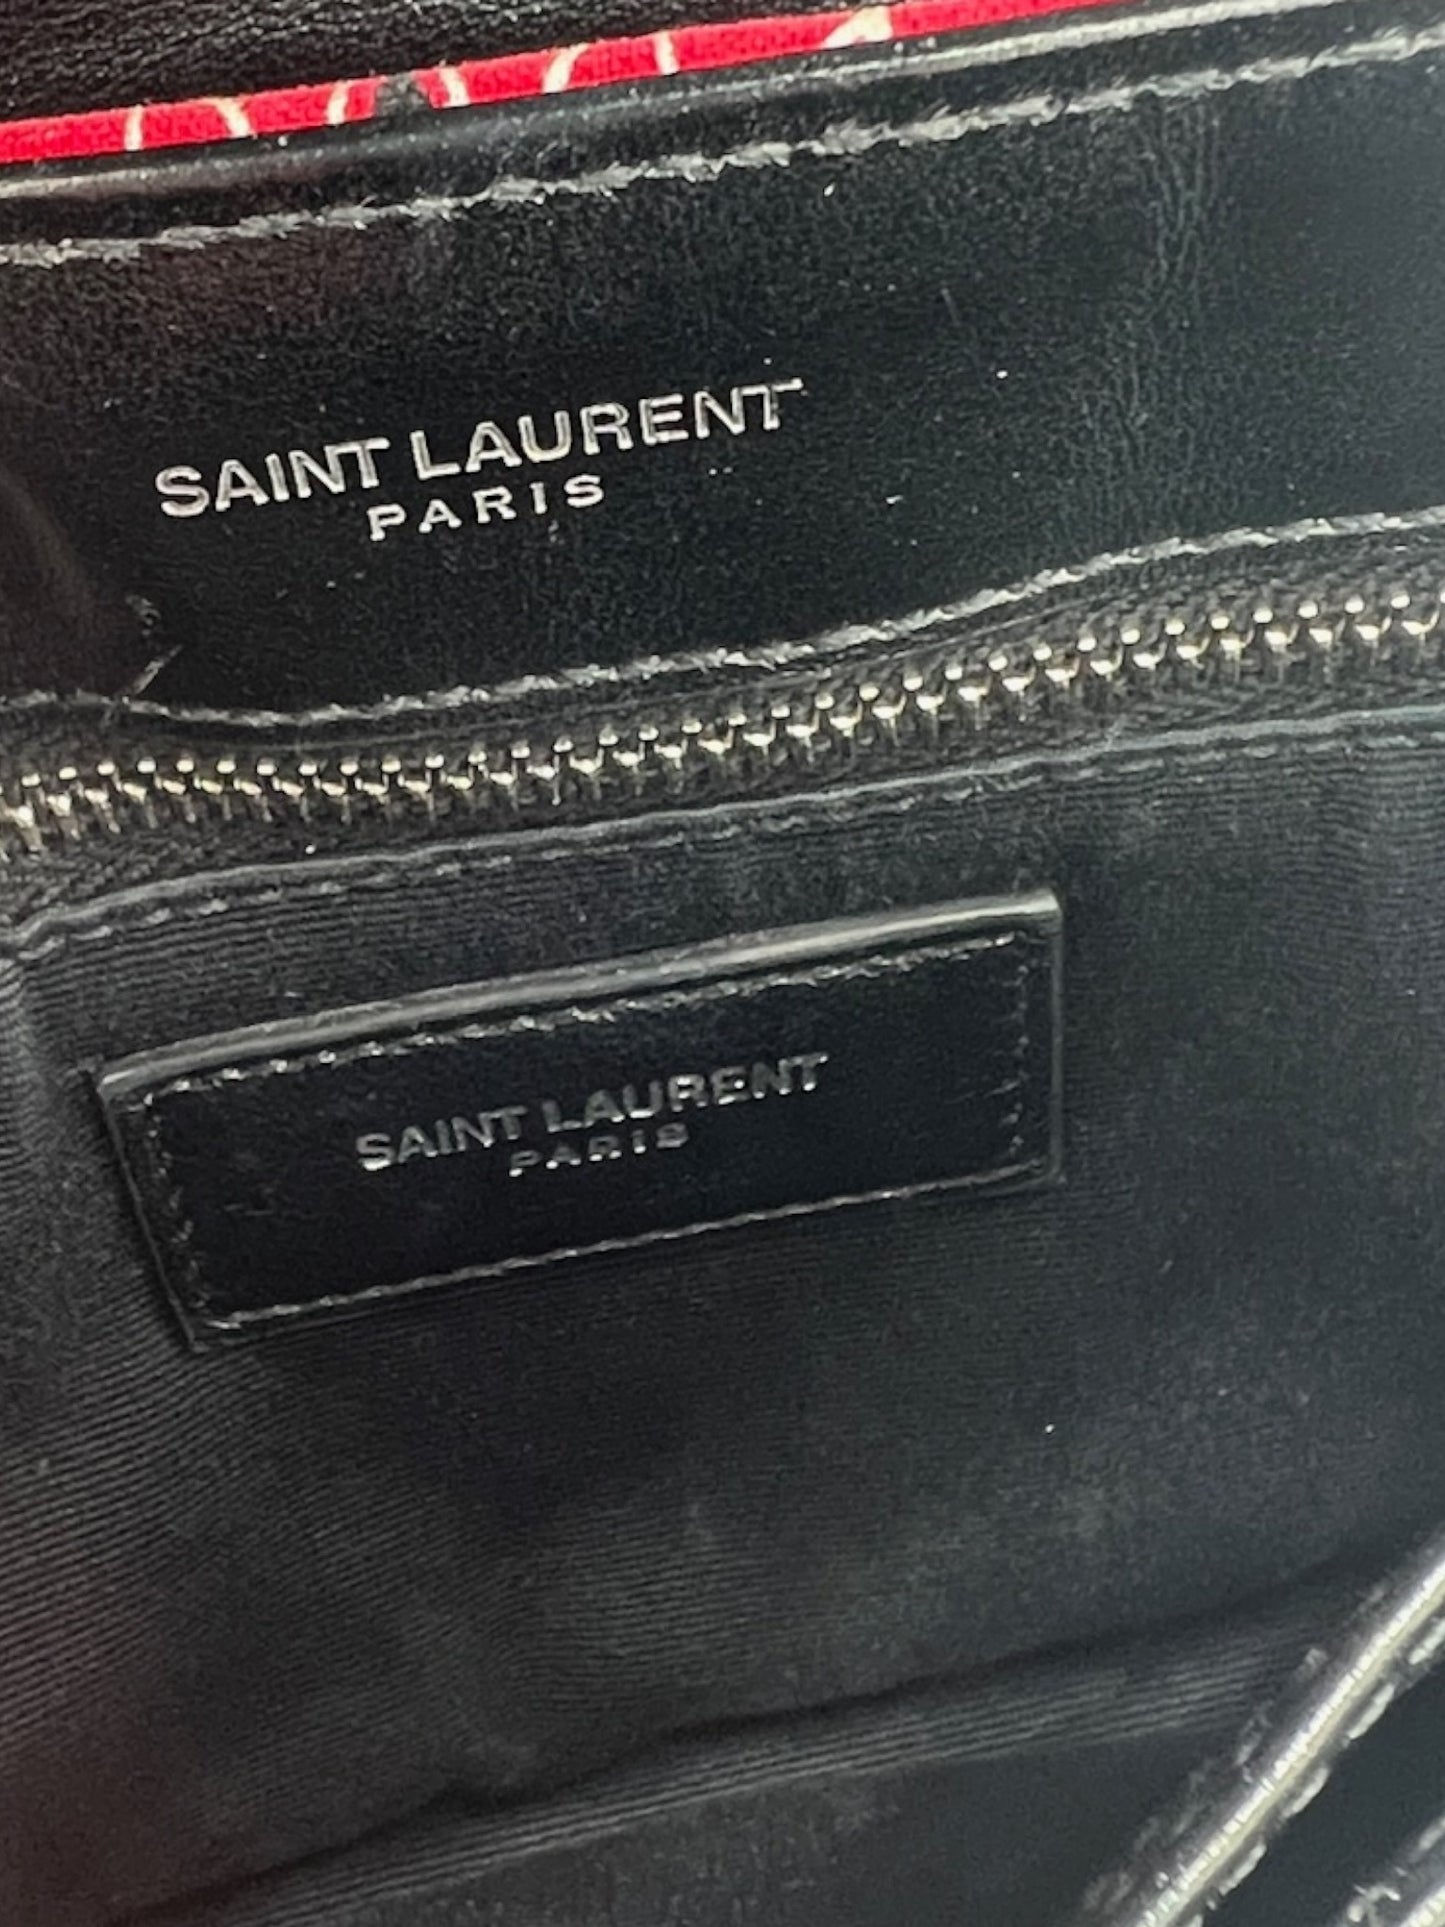 SAINT LAURENT - Bandana Quilted Monogram LouLou Crossbody Bag